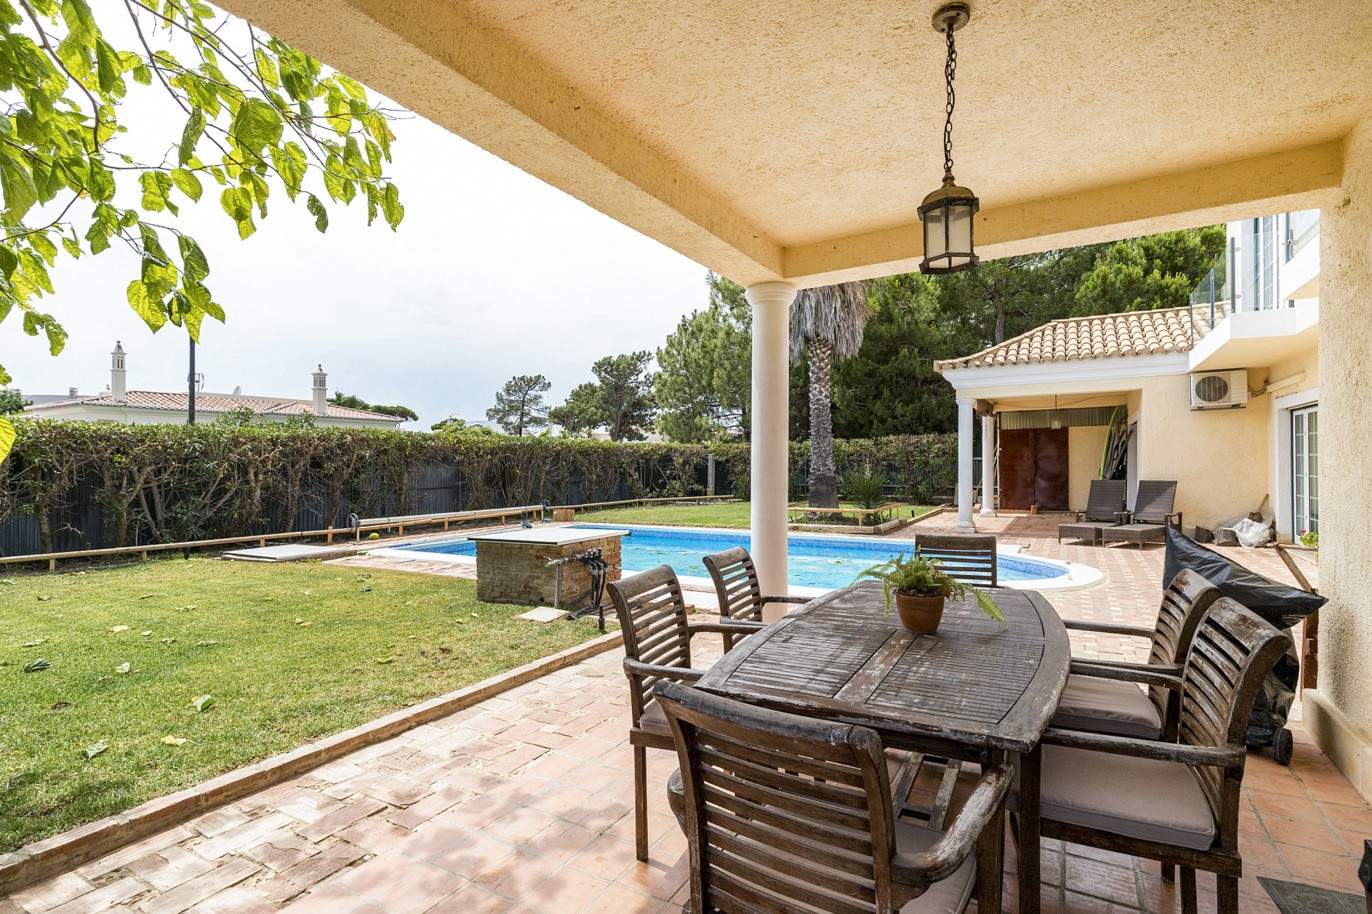 Moradia V4, com piscina, para venda, em Vila Sol, Algarve_203451